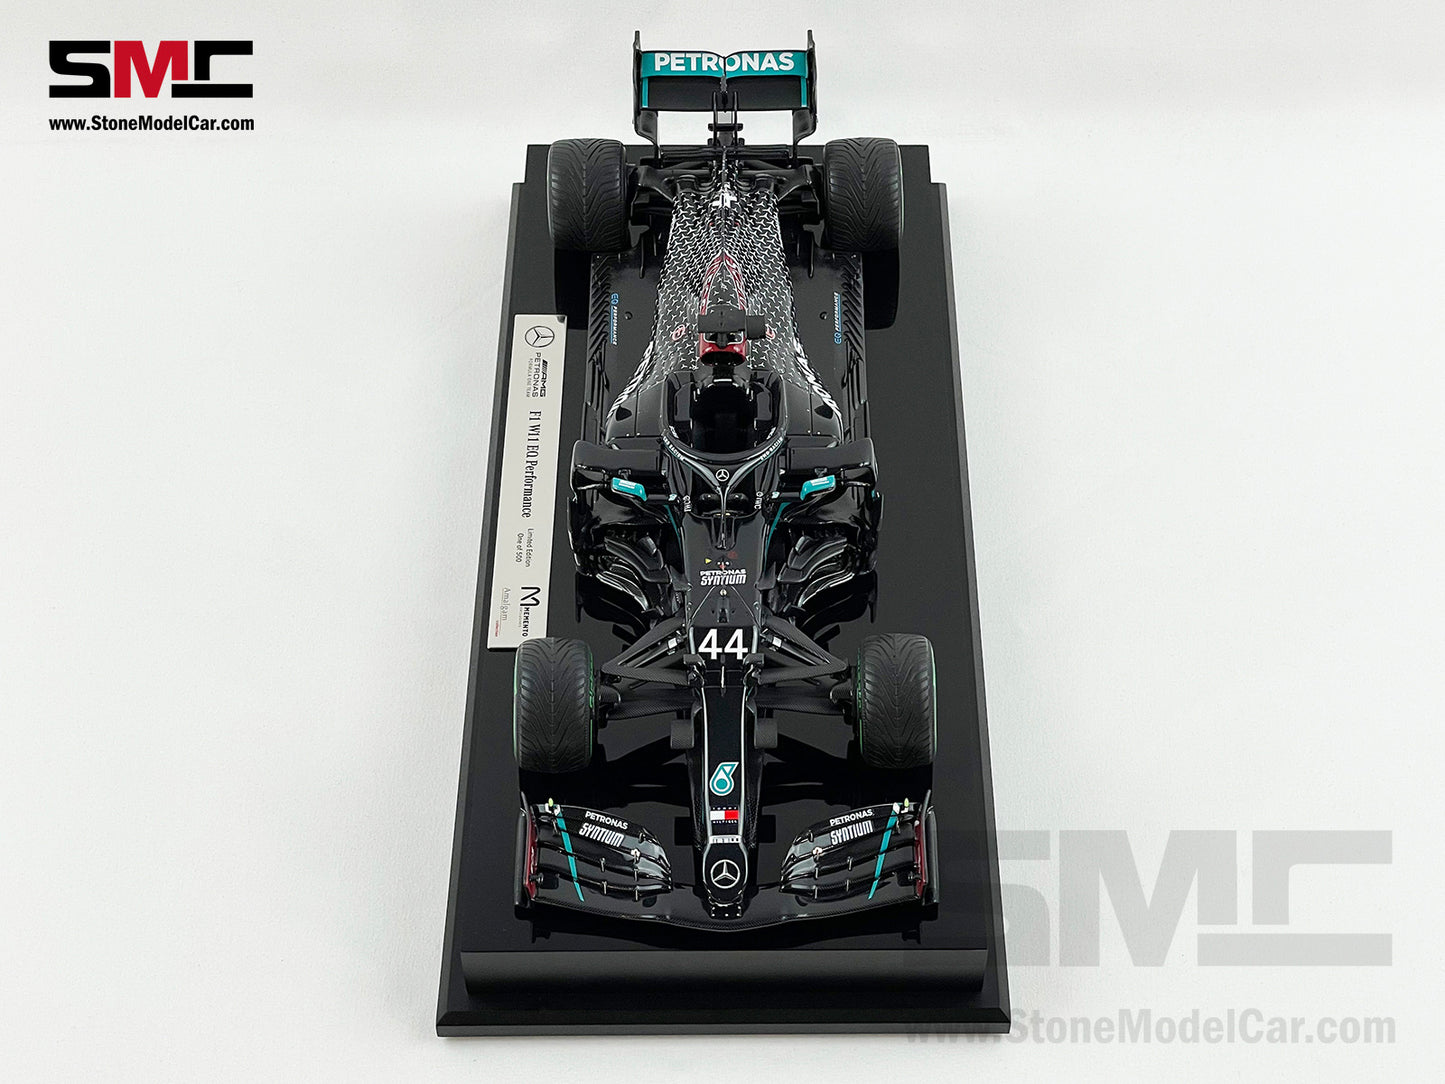 Amalgam Collection 1:18 2020 7x World Champion Mercedes F1 W11 #44 Lewis Hamilton Turkey GP